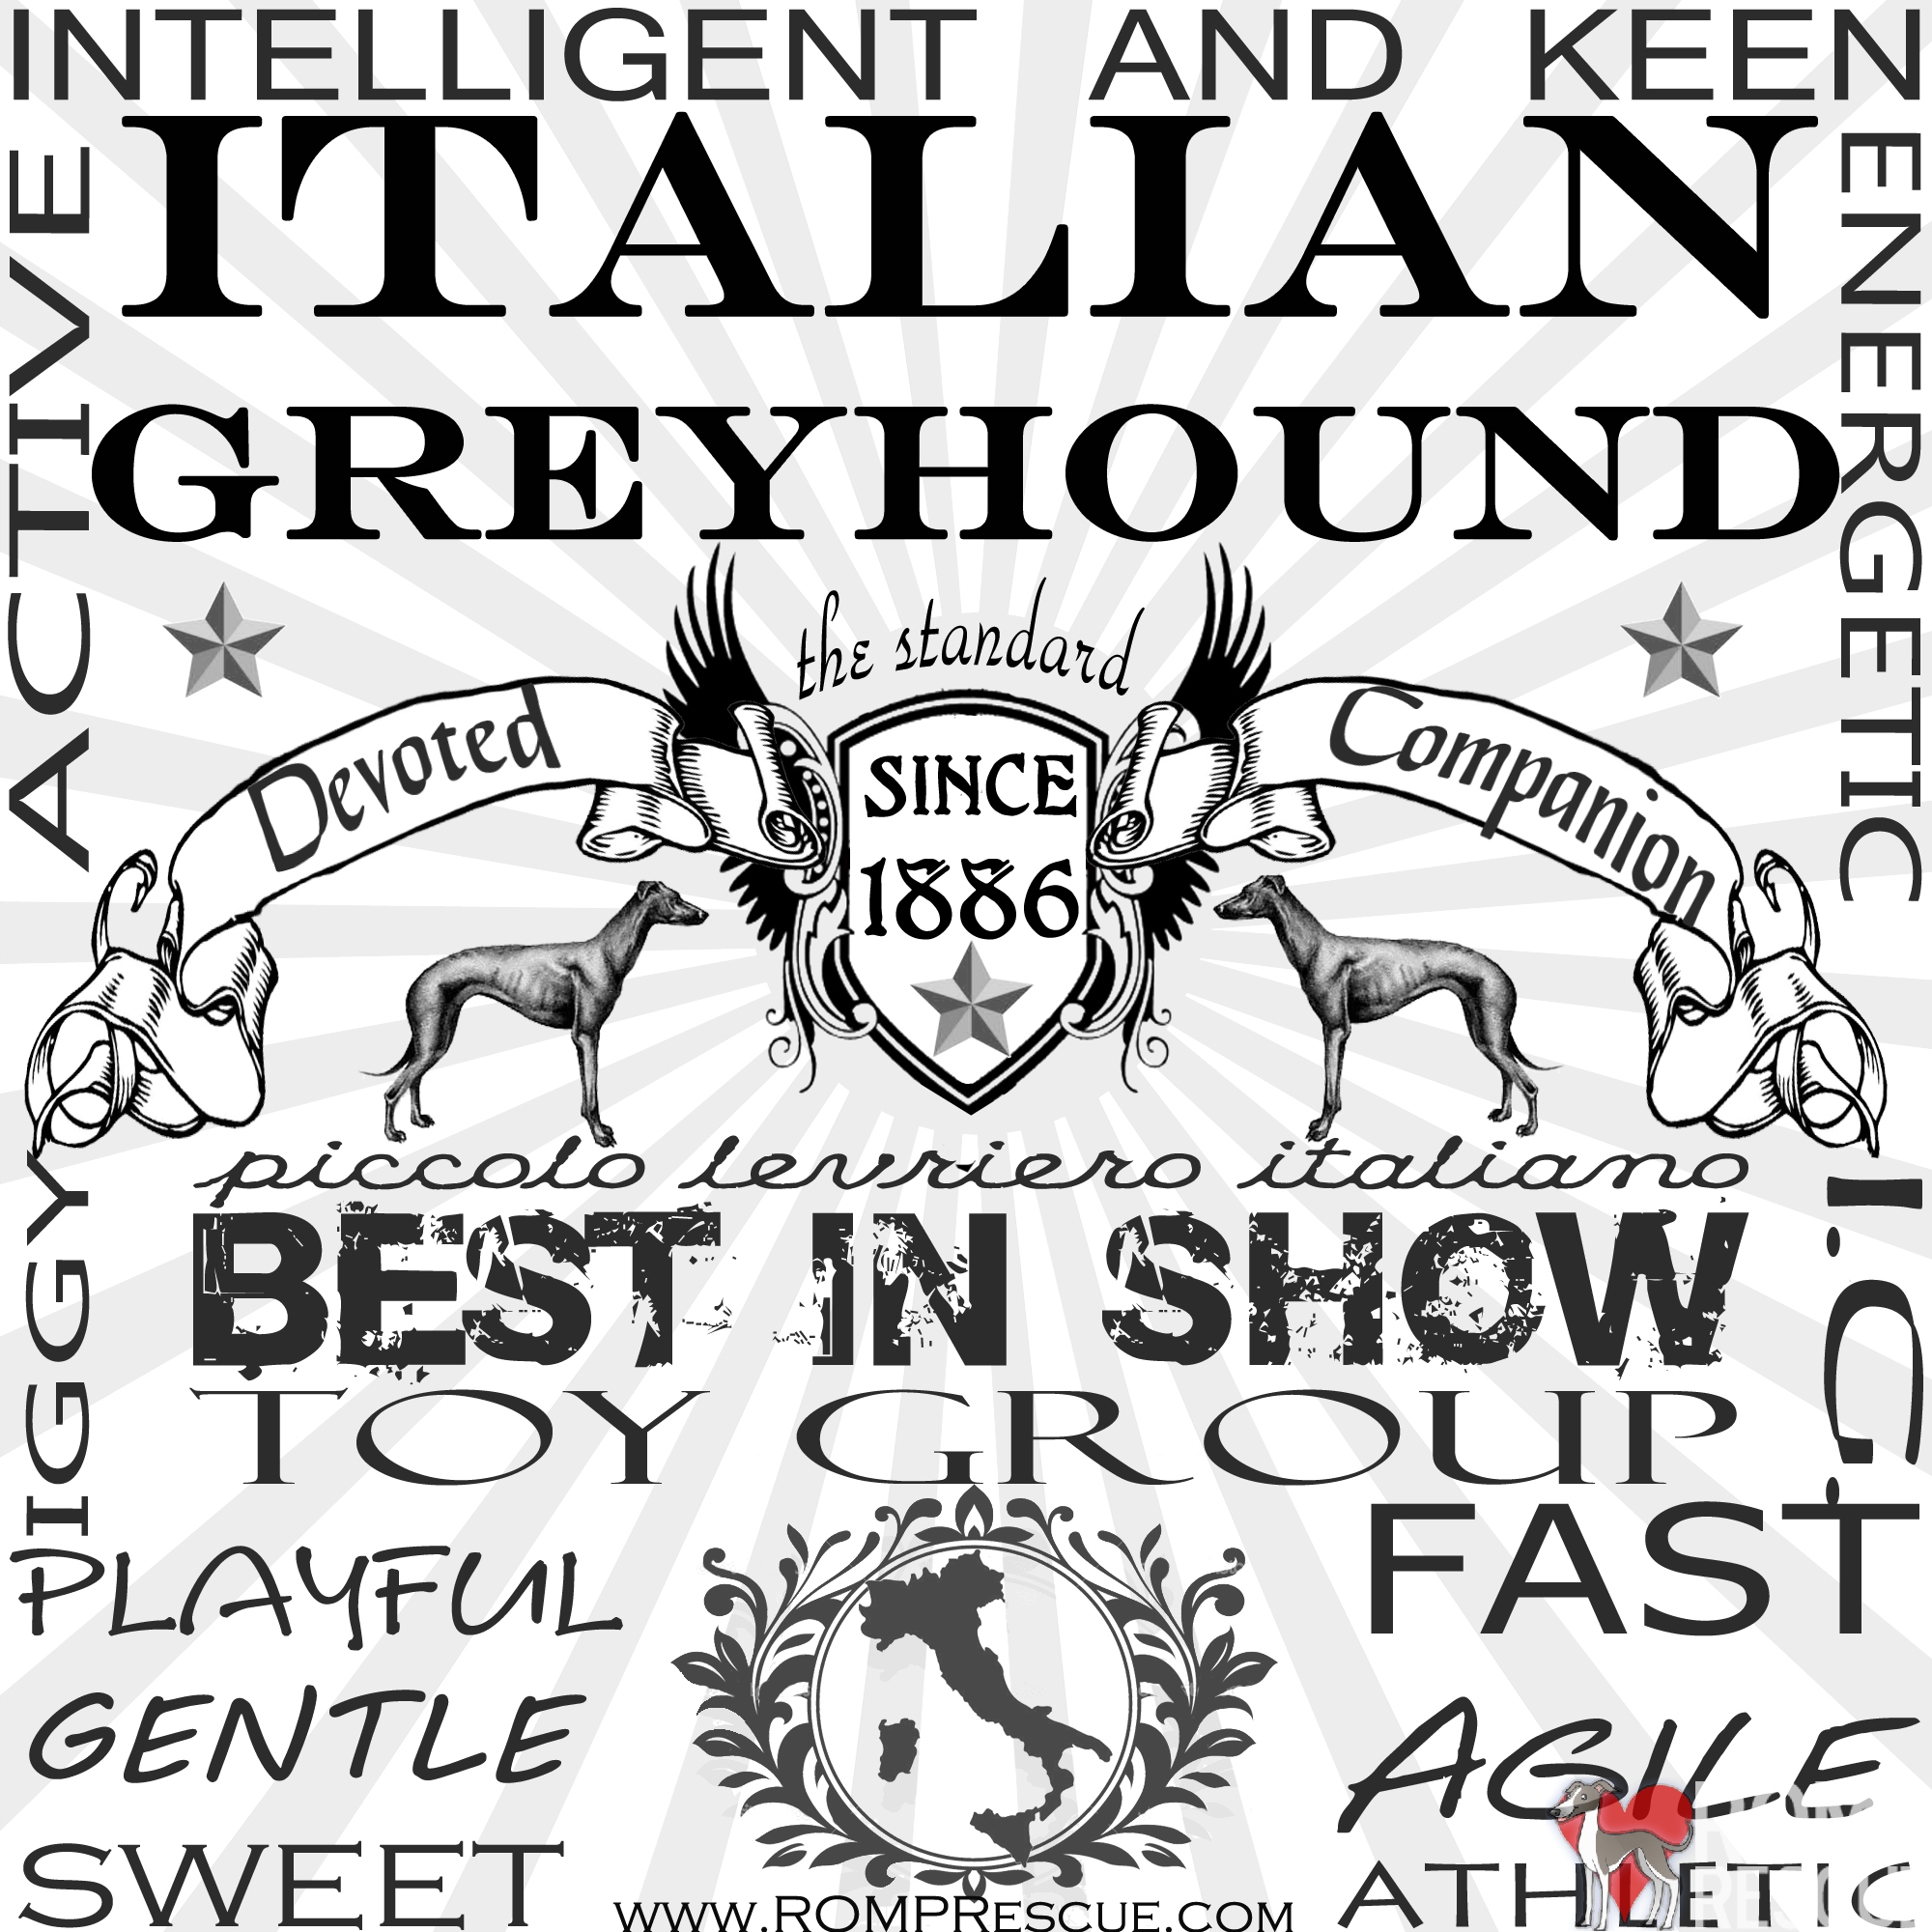 Italian Greyhound since 1886, IG shirt, Iggy shirt, italian greyhound shirt